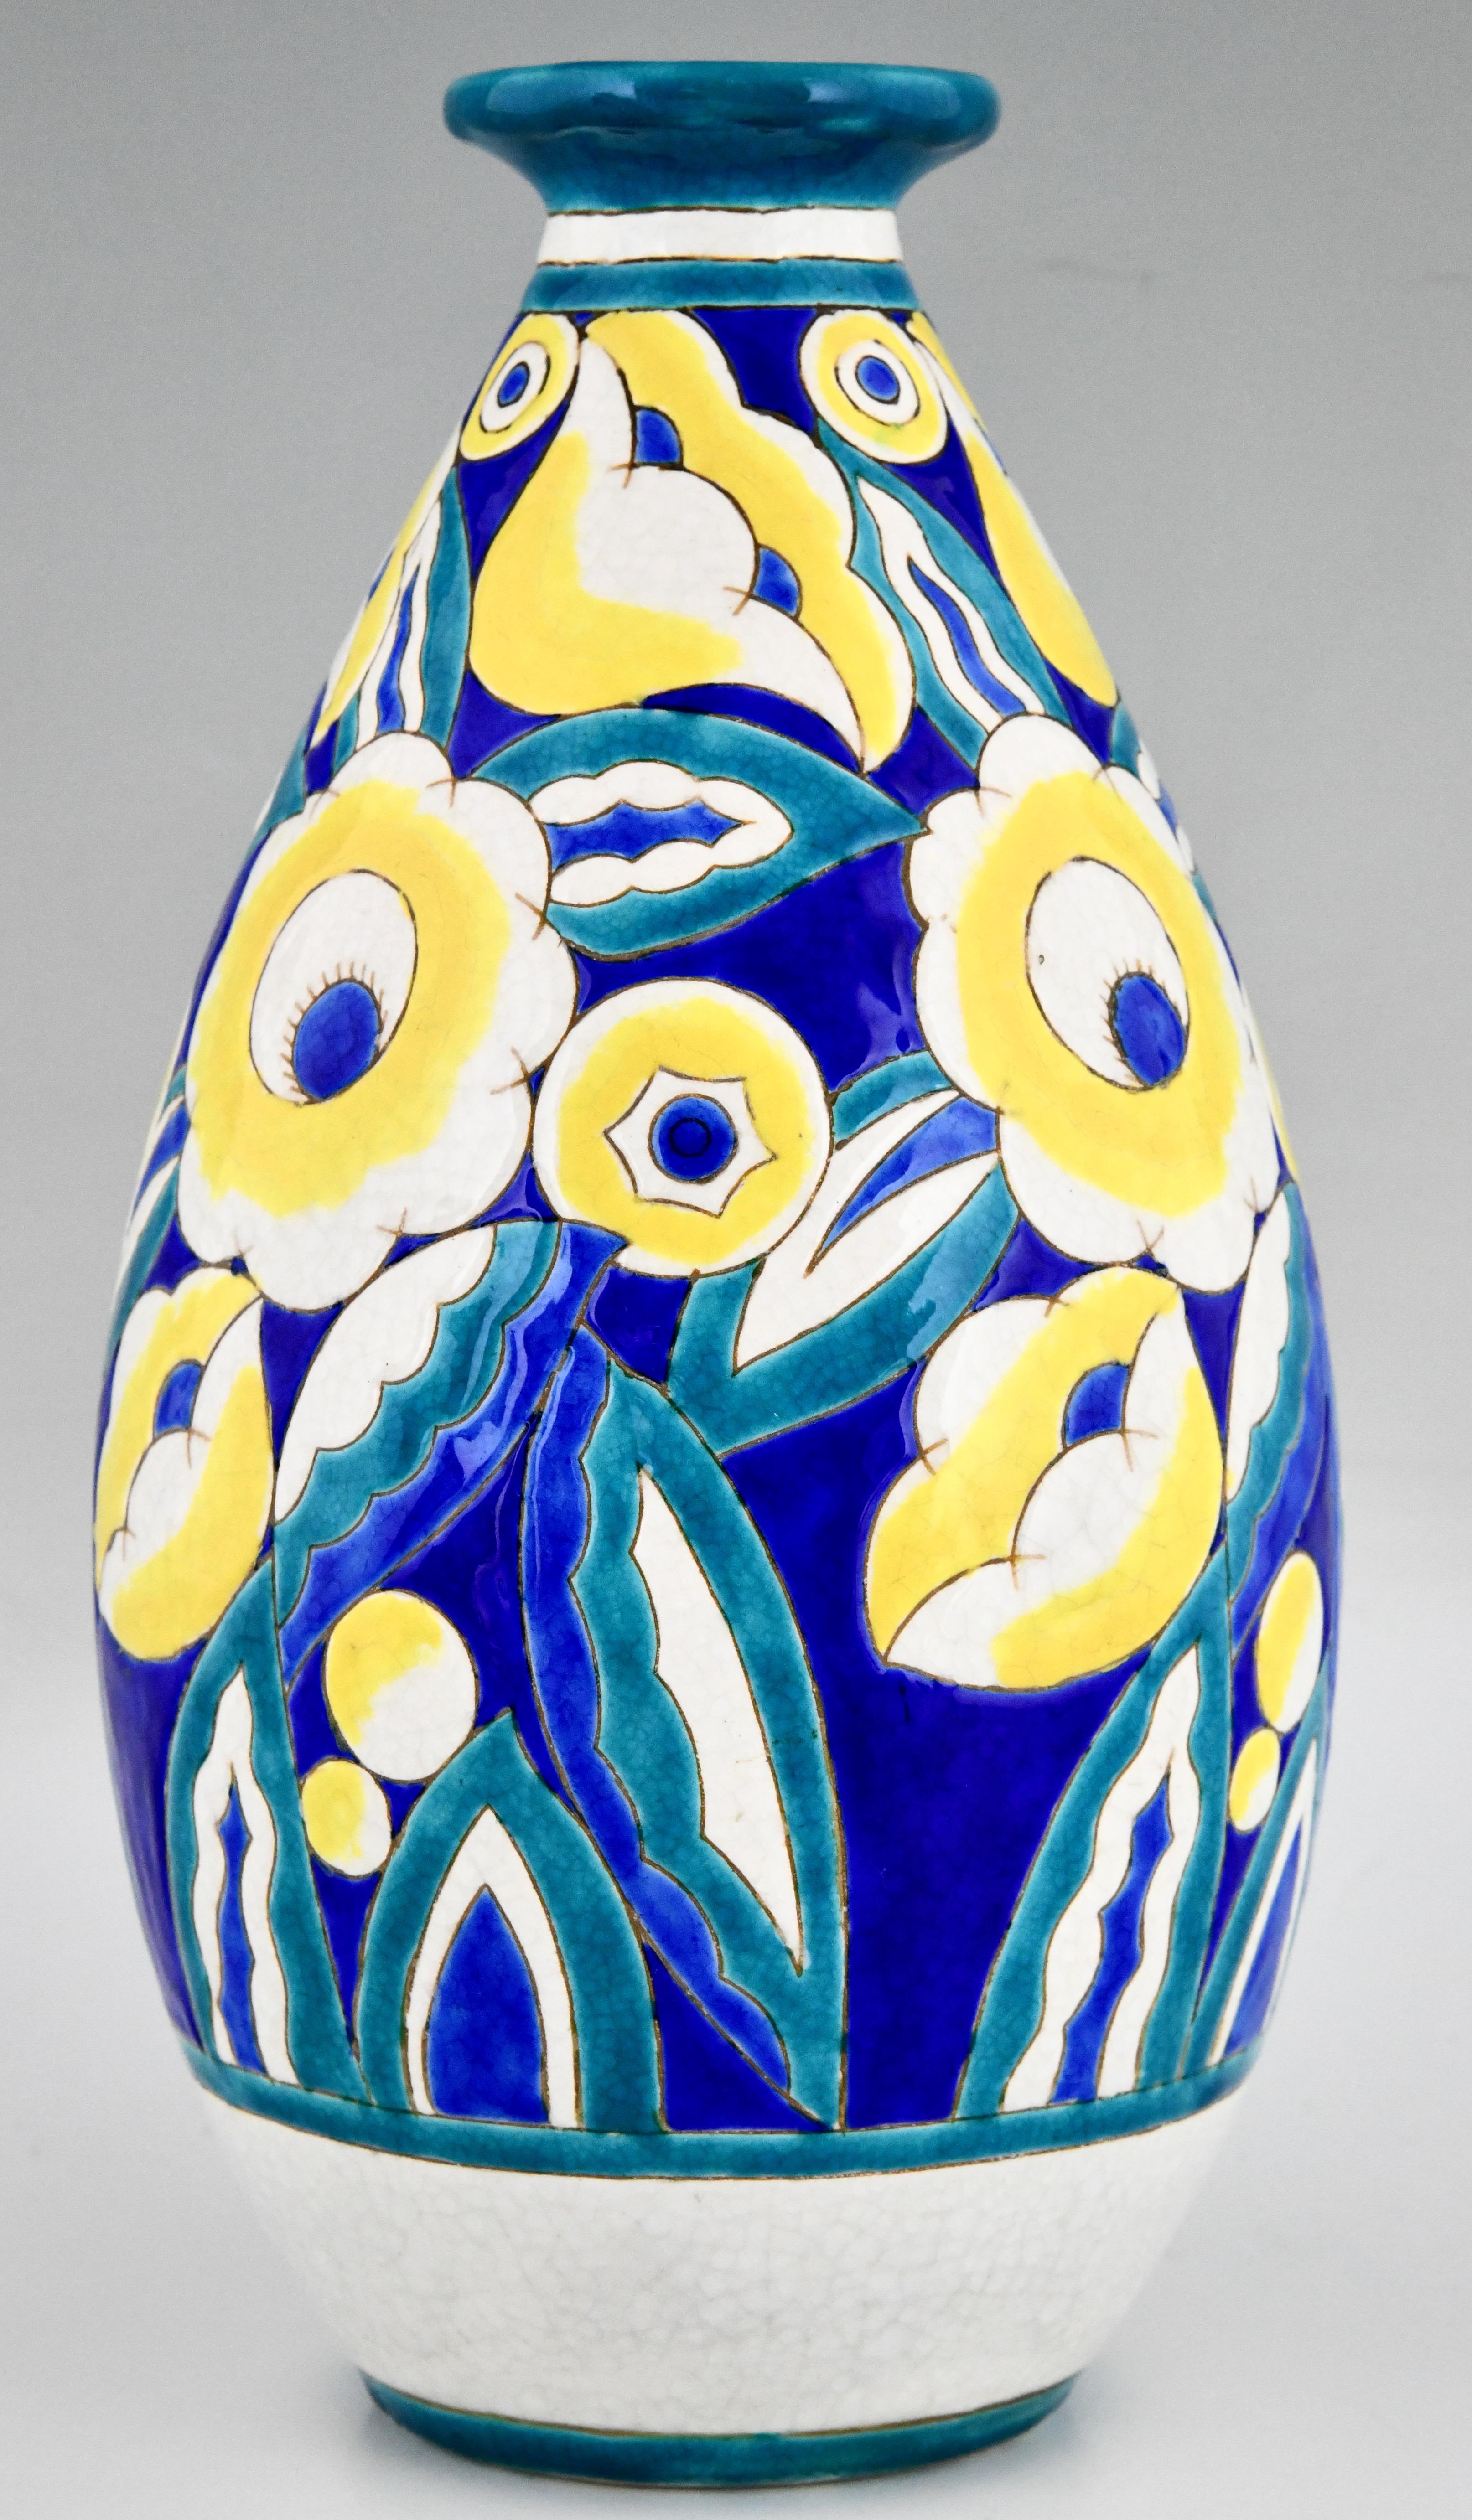 Glazed Pair of Art Deco Ceramic Vases with Flowers by Keramis, Belgium 1932 For Sale